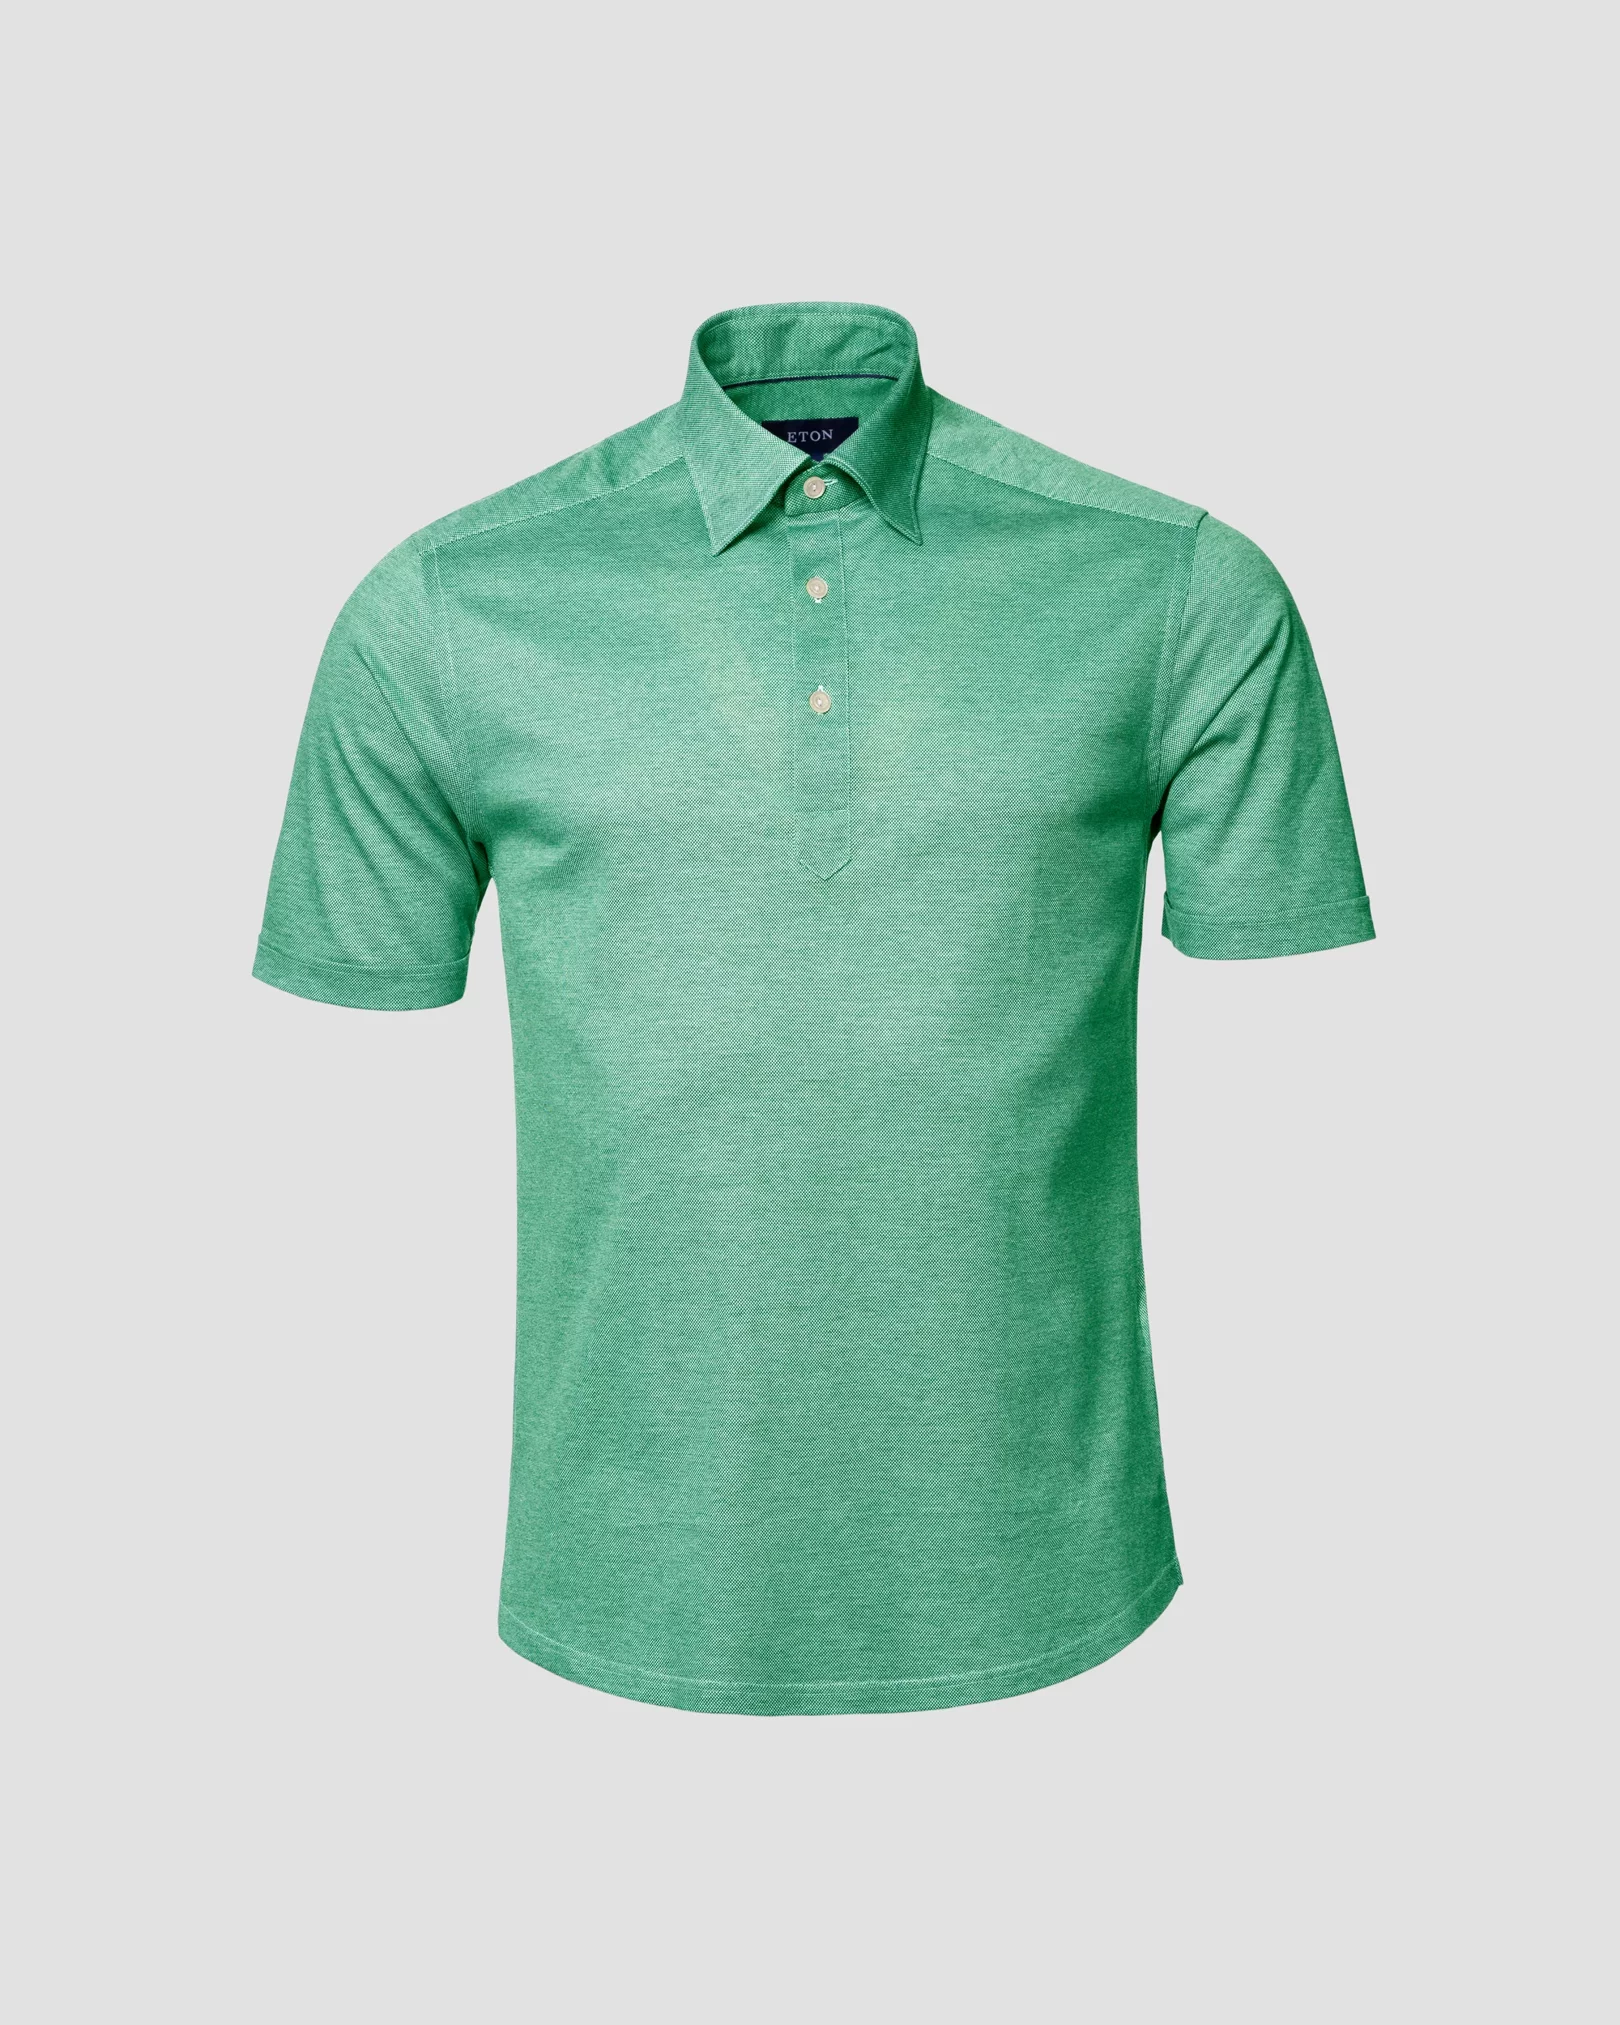 Eton - light green jersey regular fit